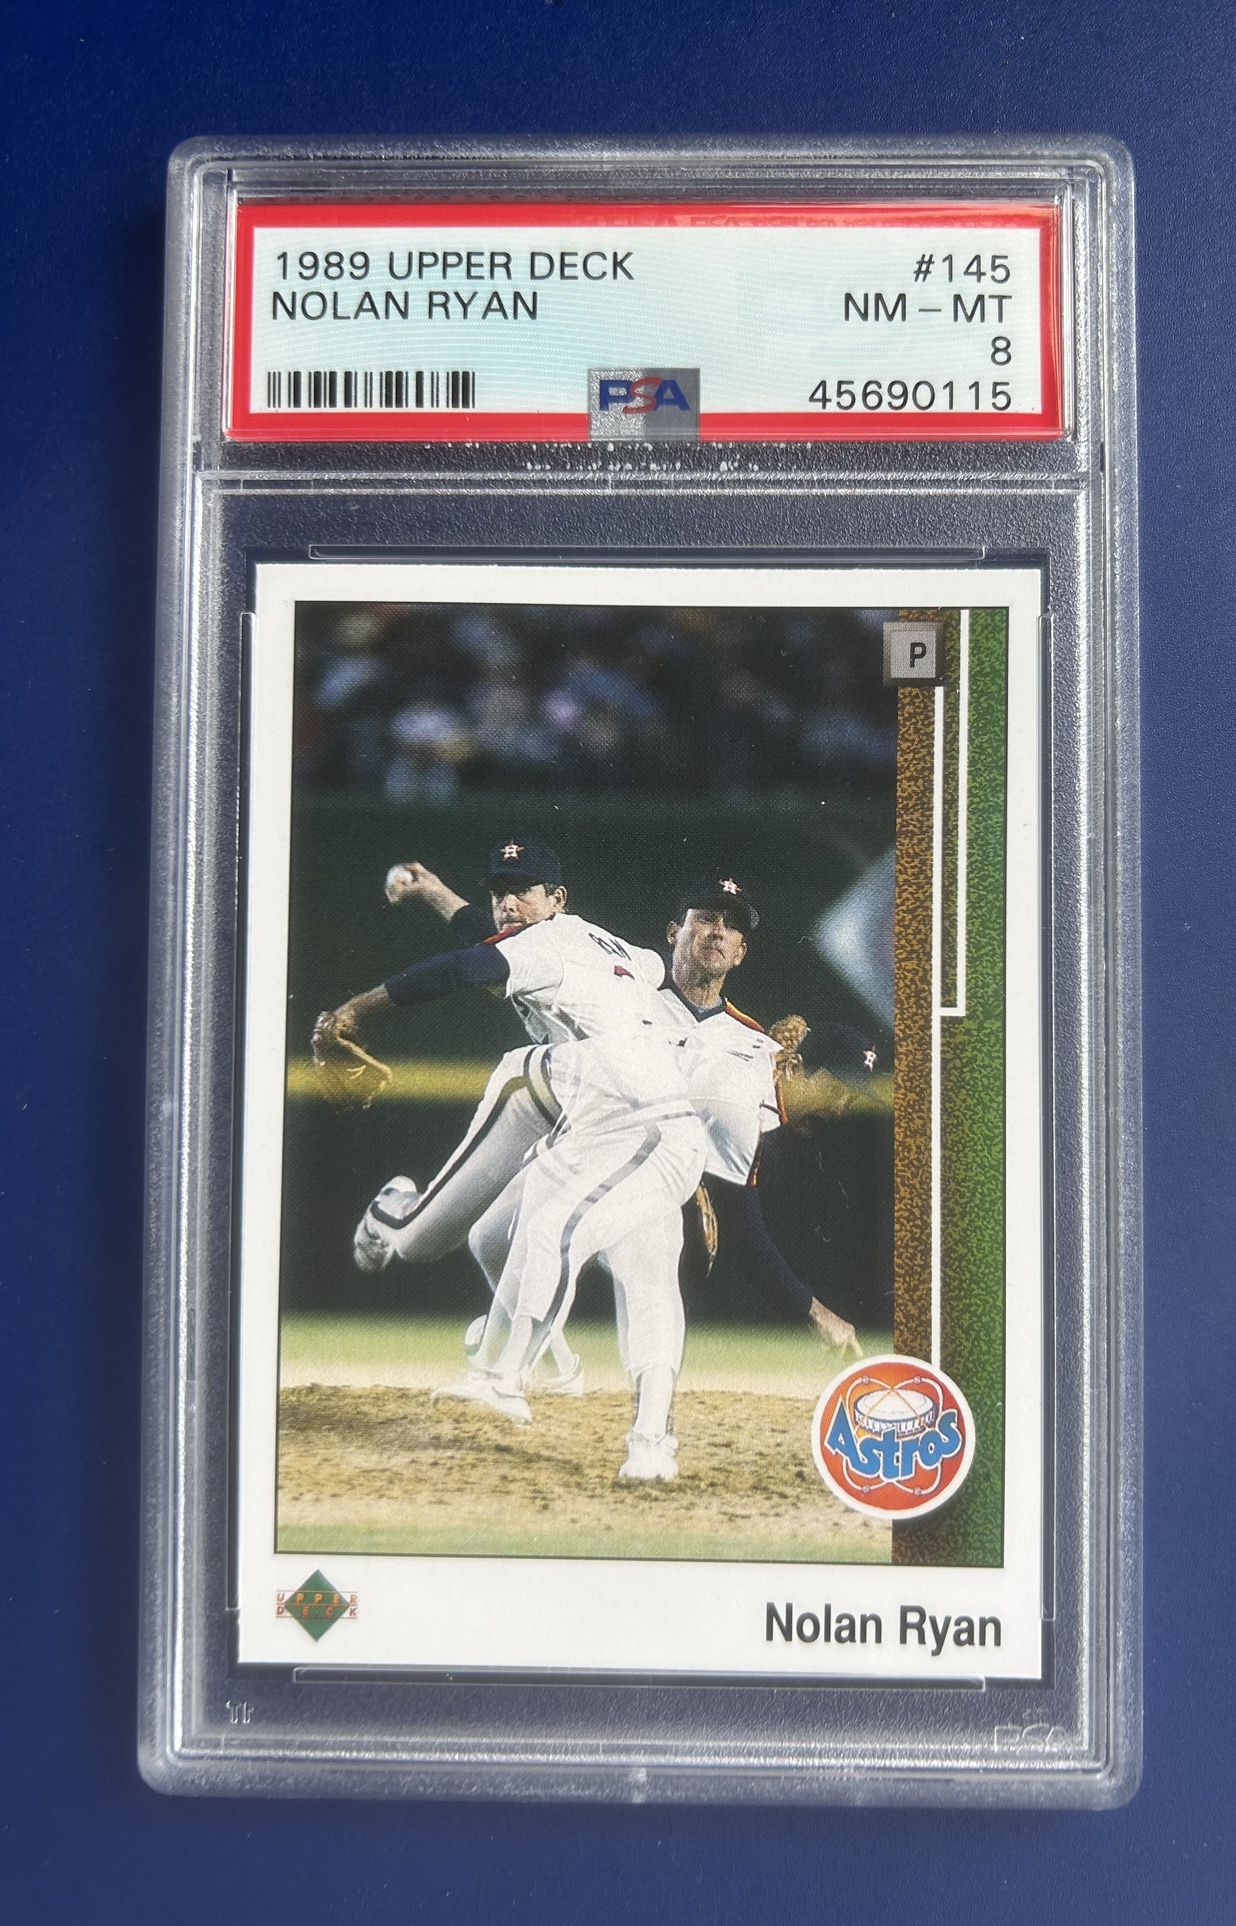 1989 Upper Deck Nolan Ryan Baseball Card Graded PSA 8